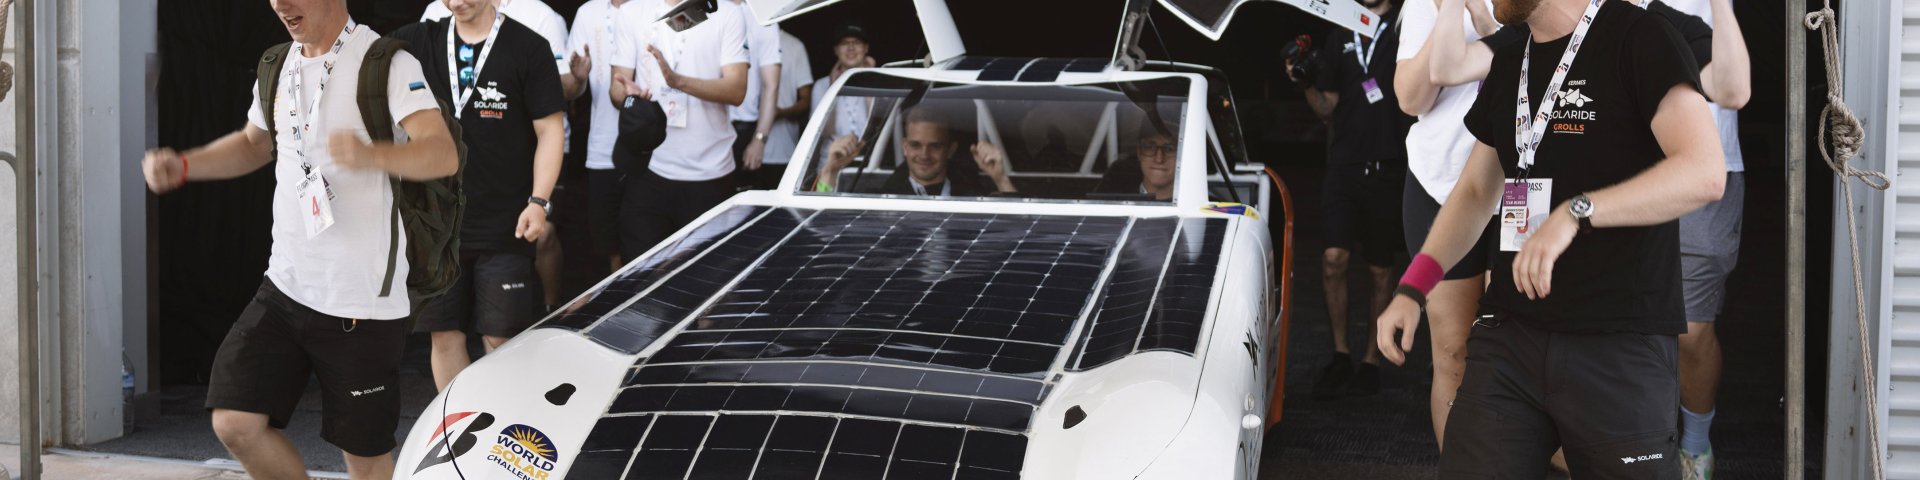 Solaride päikeseauto ja meeskond